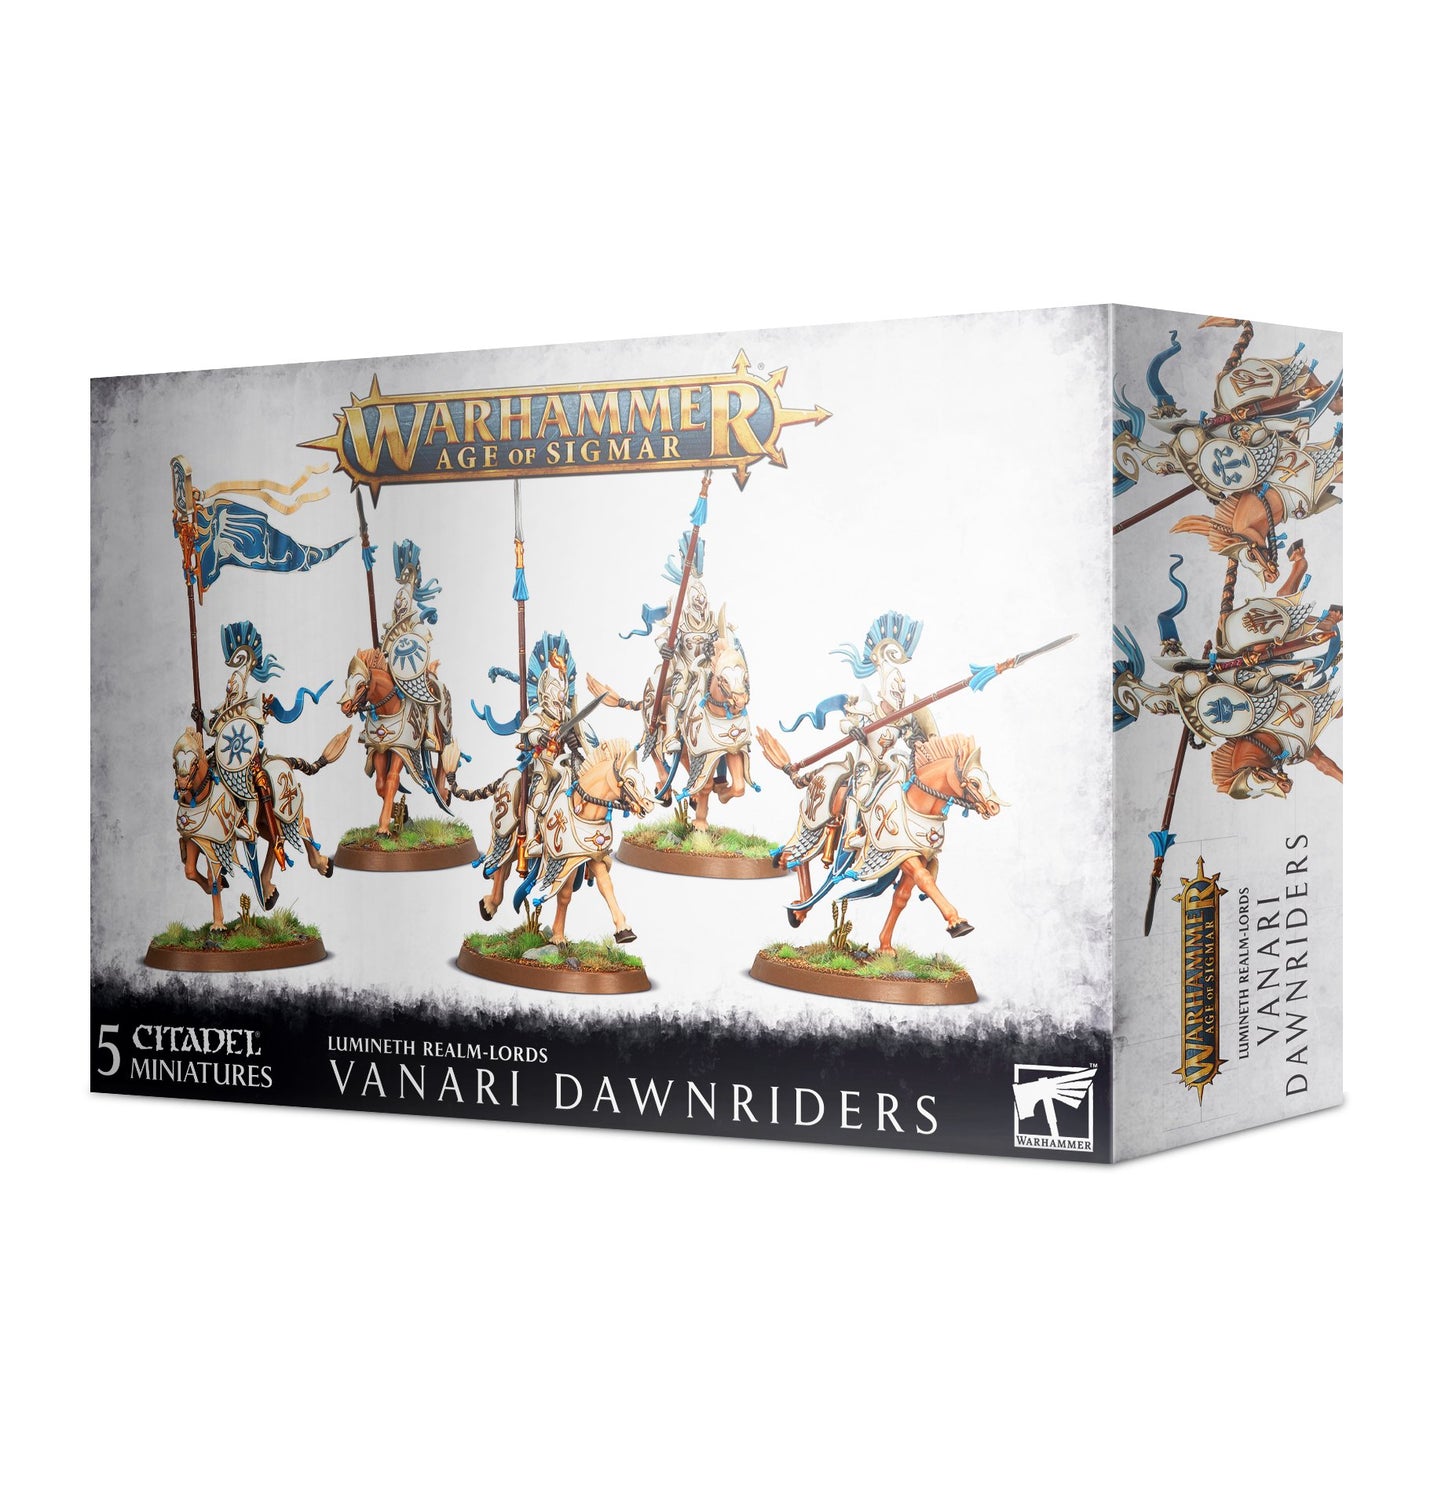 Lumineth Realm-Lords Vanari Dawnriders